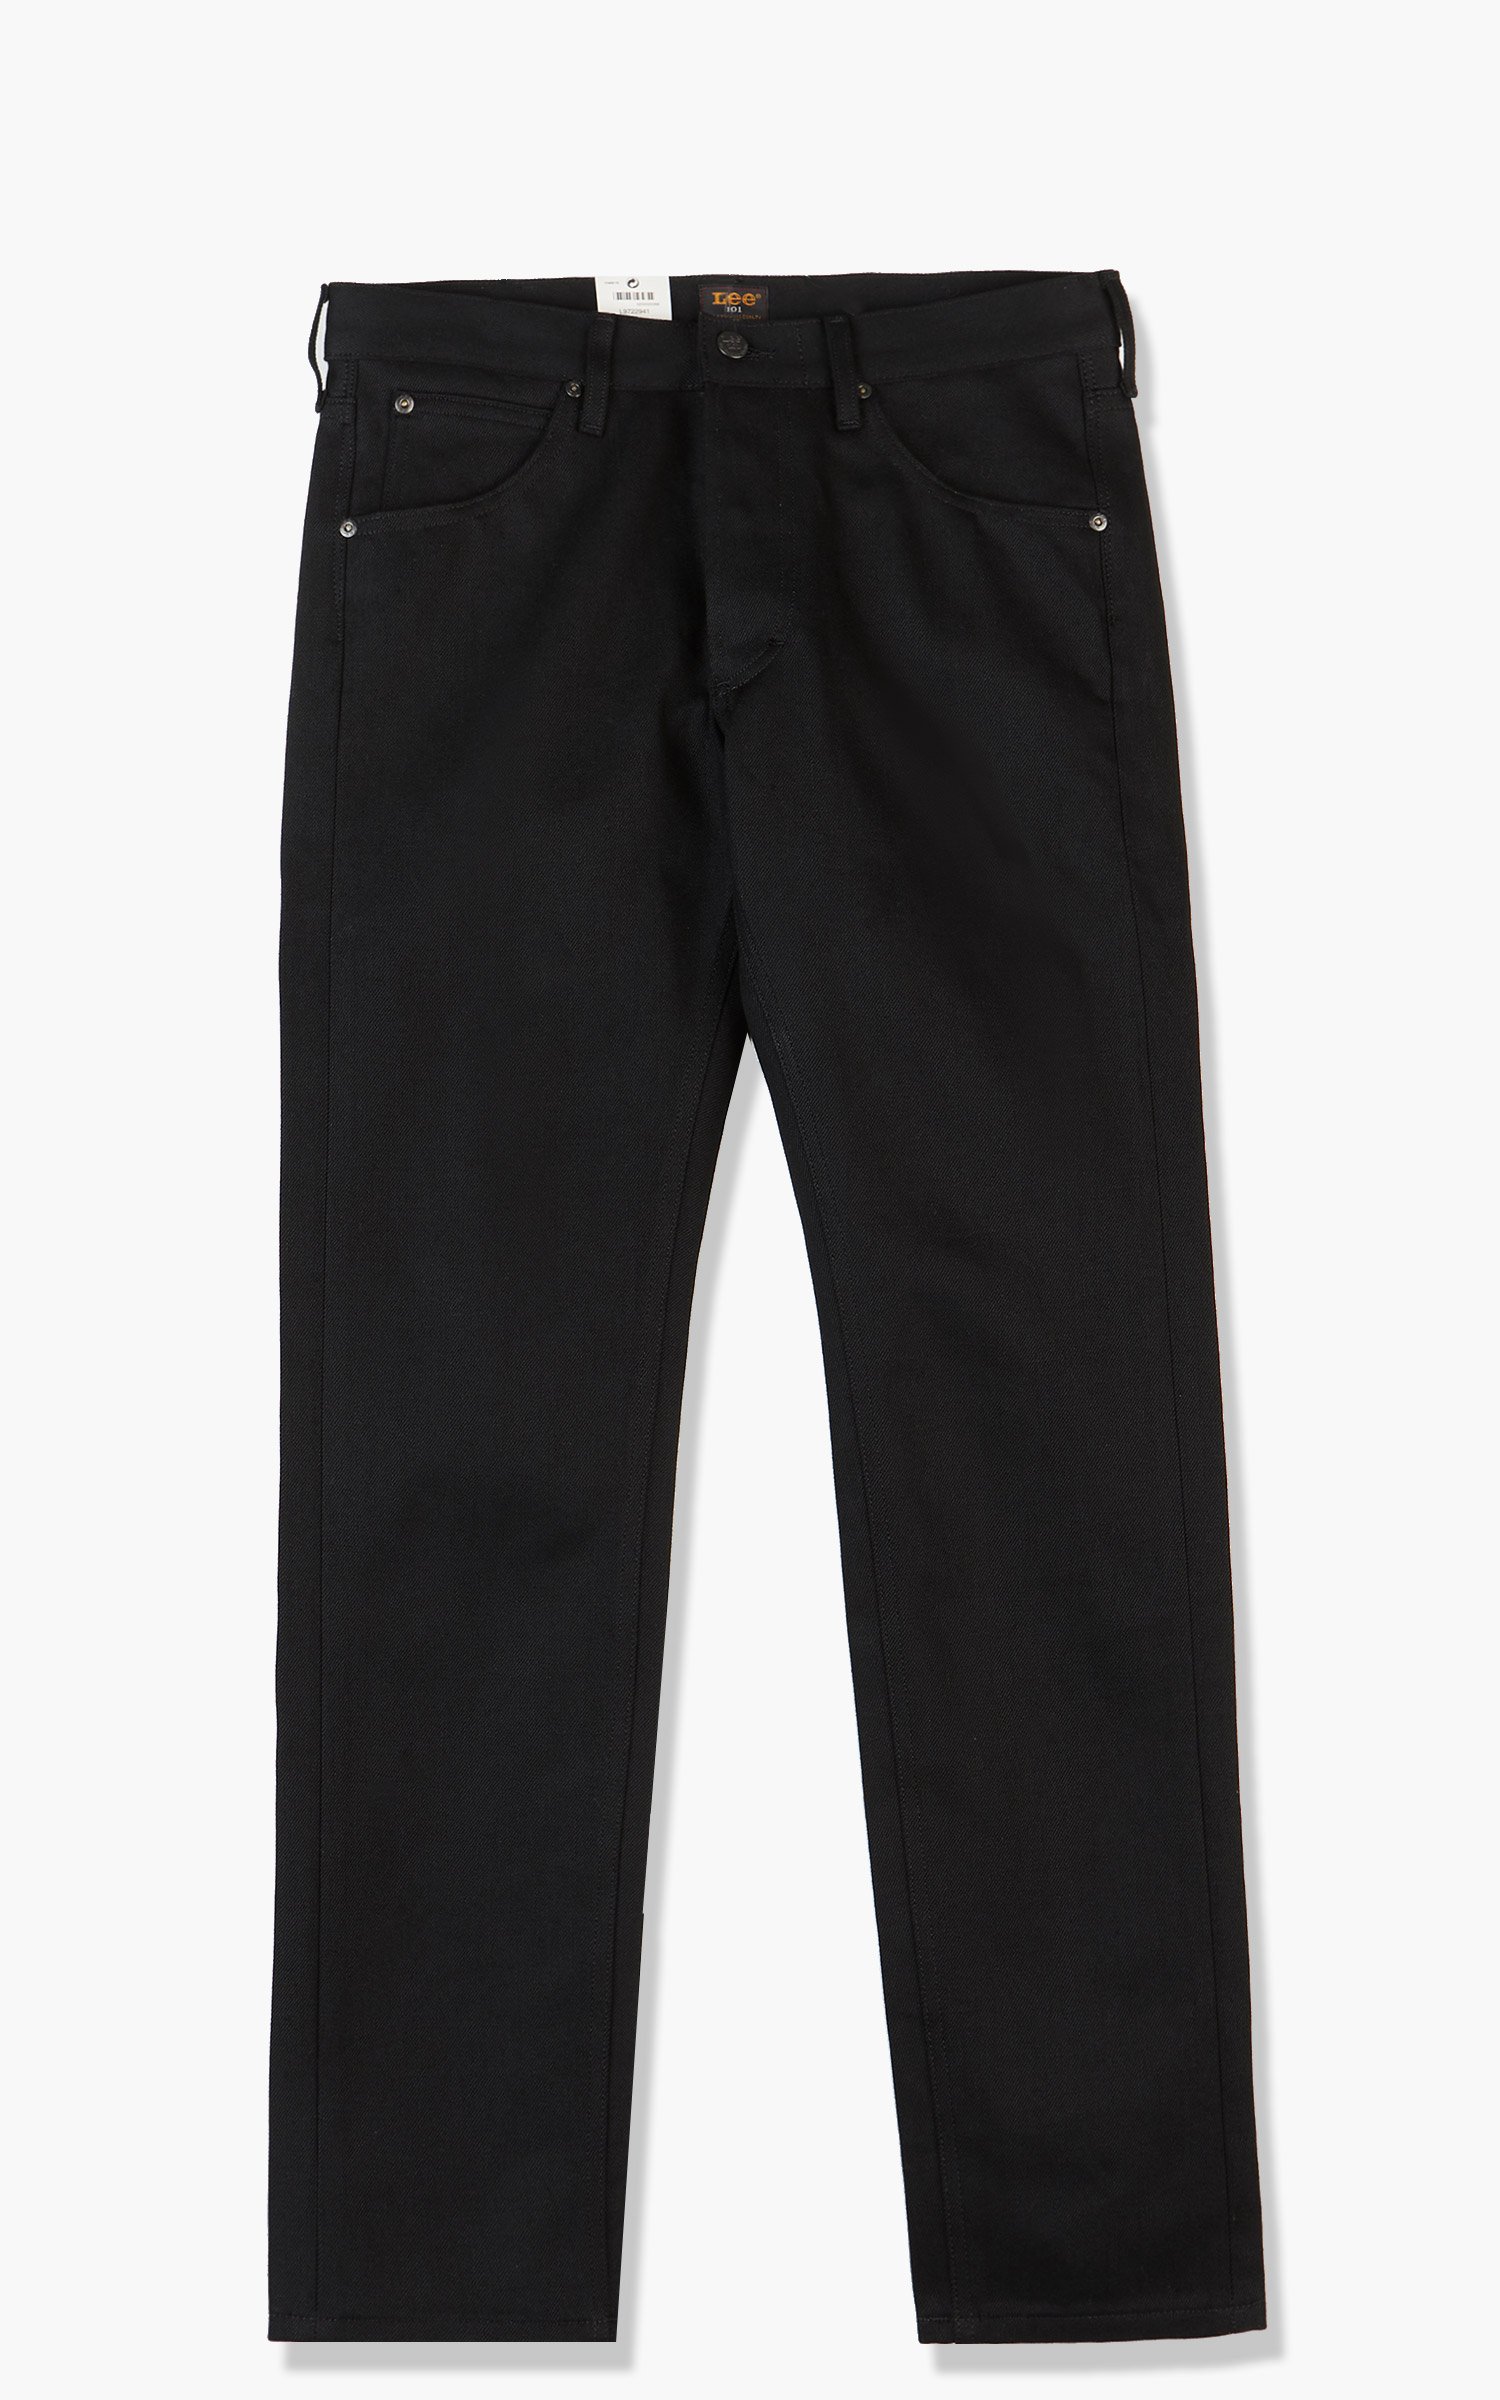 Z.CAVARICCI VINTAGE! Sz 29 80/90s Black Jeans High waist button fly Pockets  | eBay